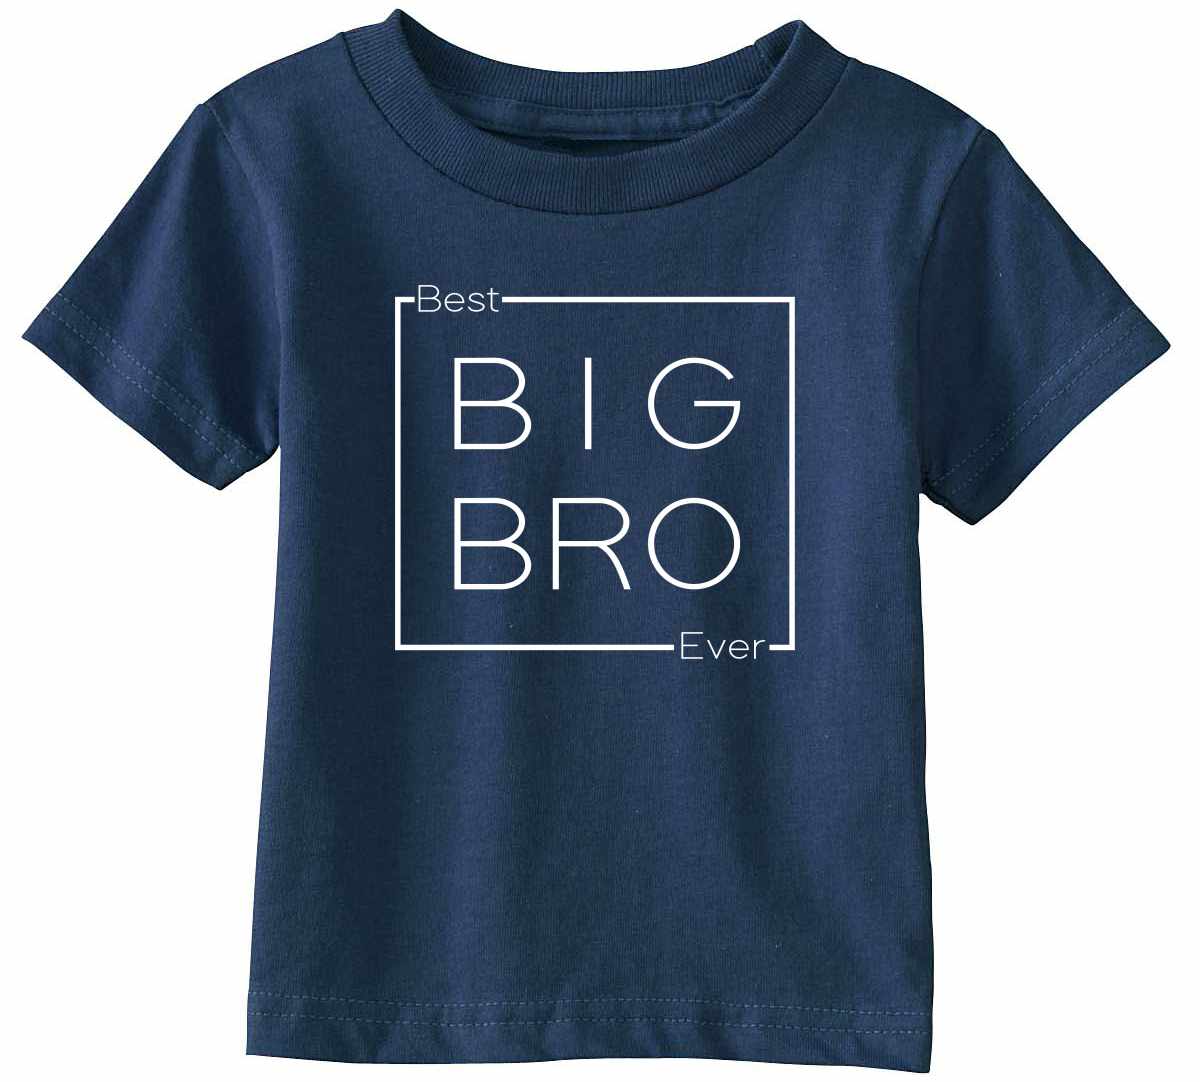 Best Big Bro Ever - Big Brother - Box on Infant-Toddler T-Shirt (#1339-7)